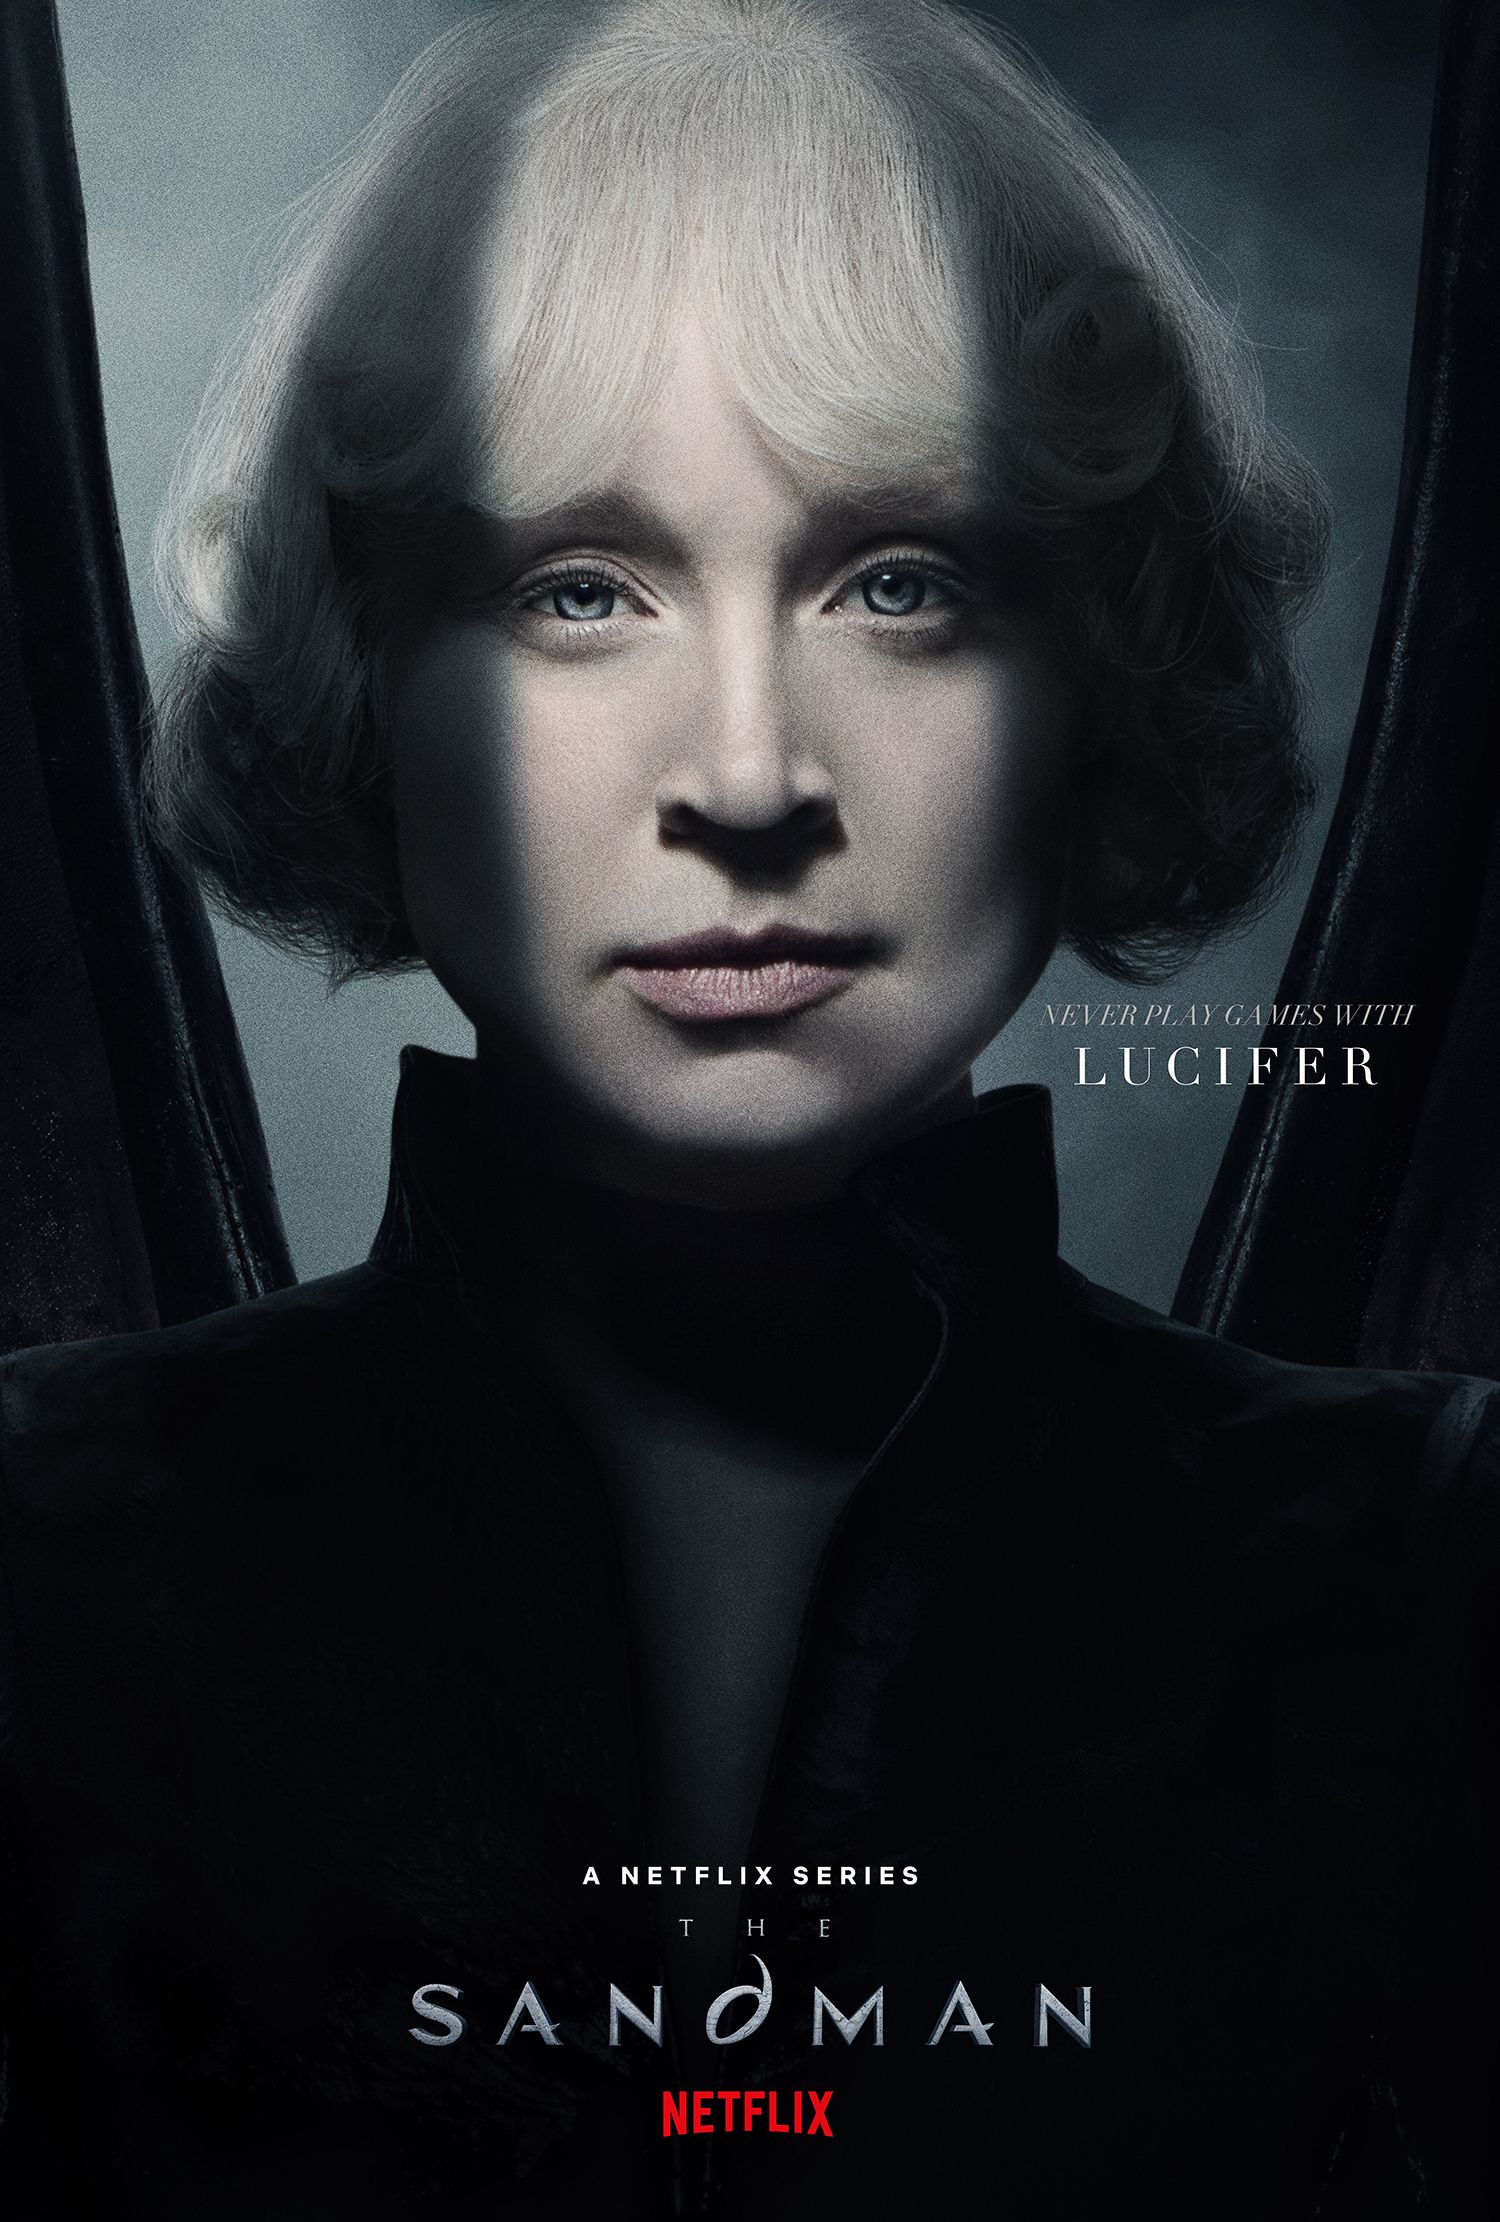 Gwendoline Christie as Lucifer in The Sandman poster